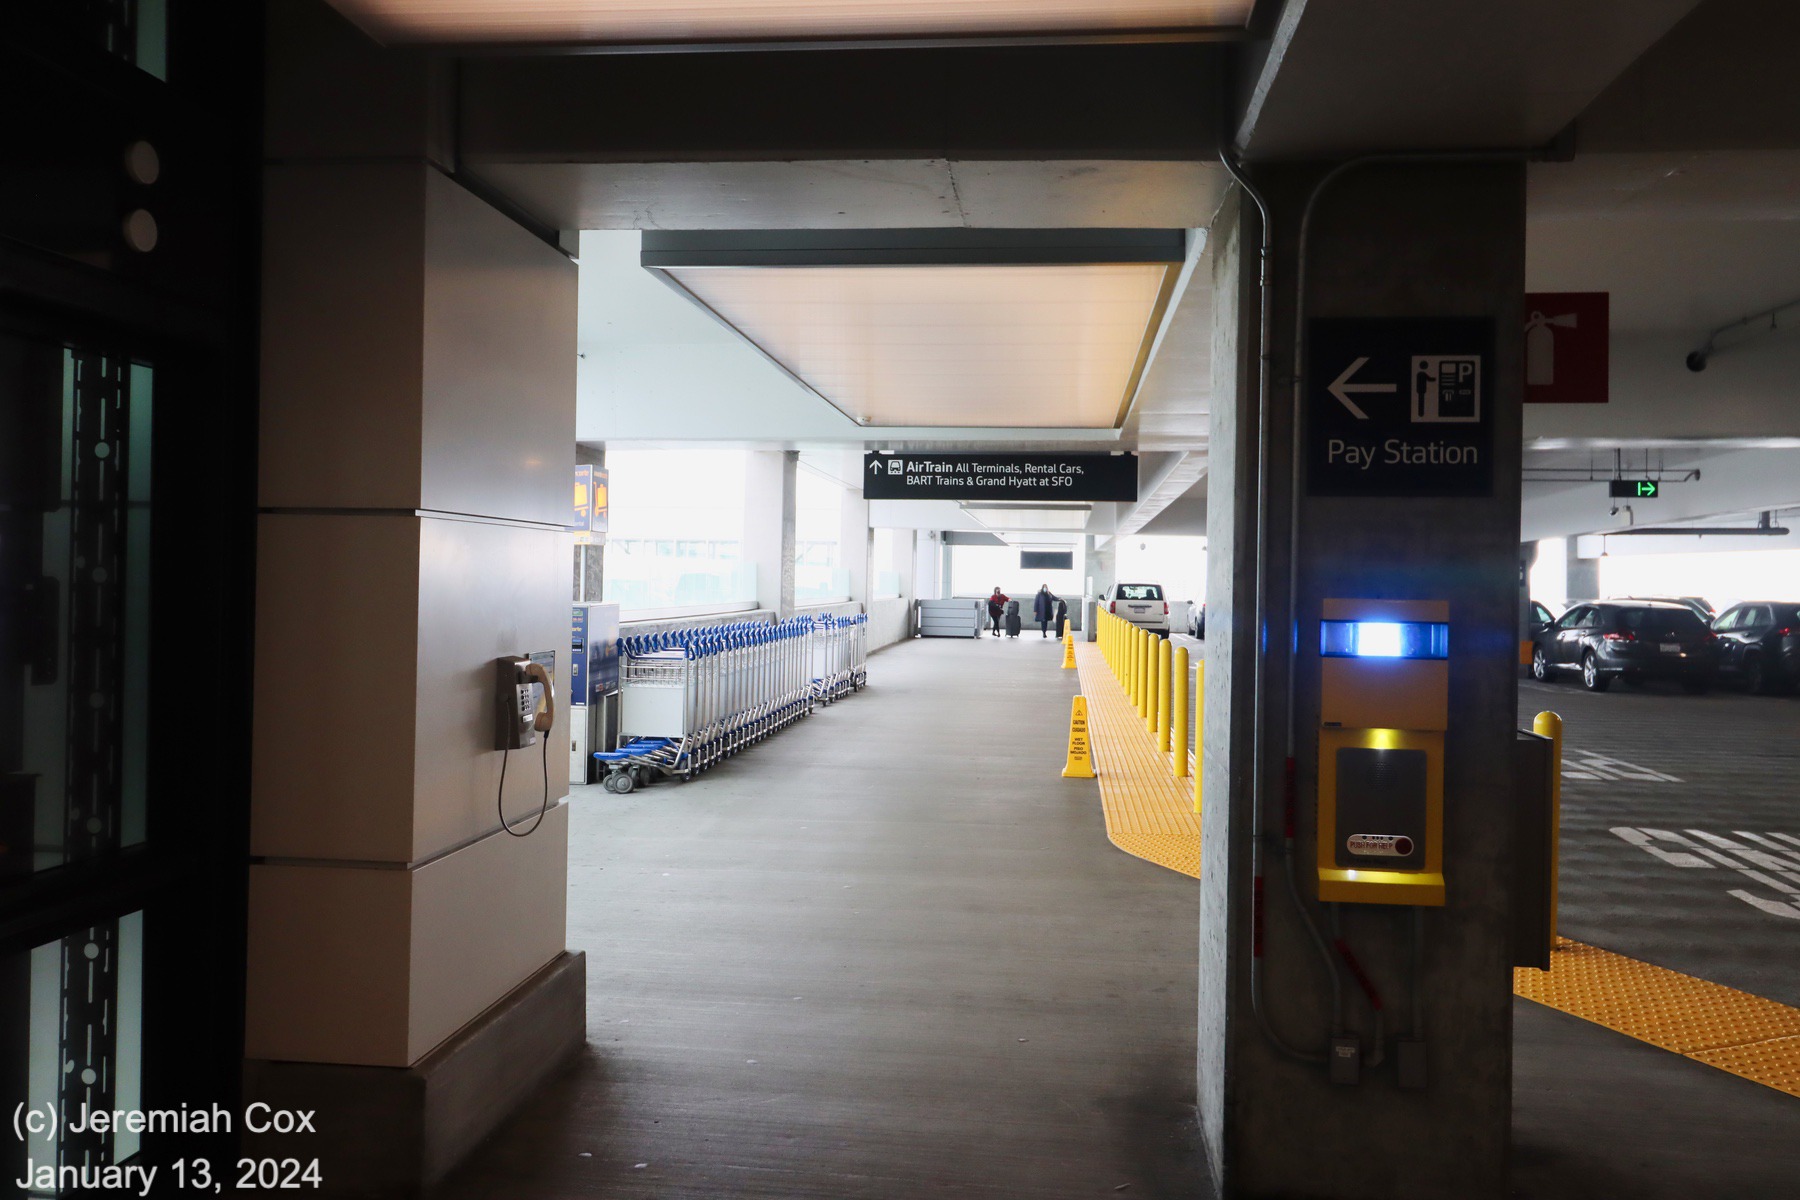 Long Term Parking (SFO AirTrain) - The SubwayNut